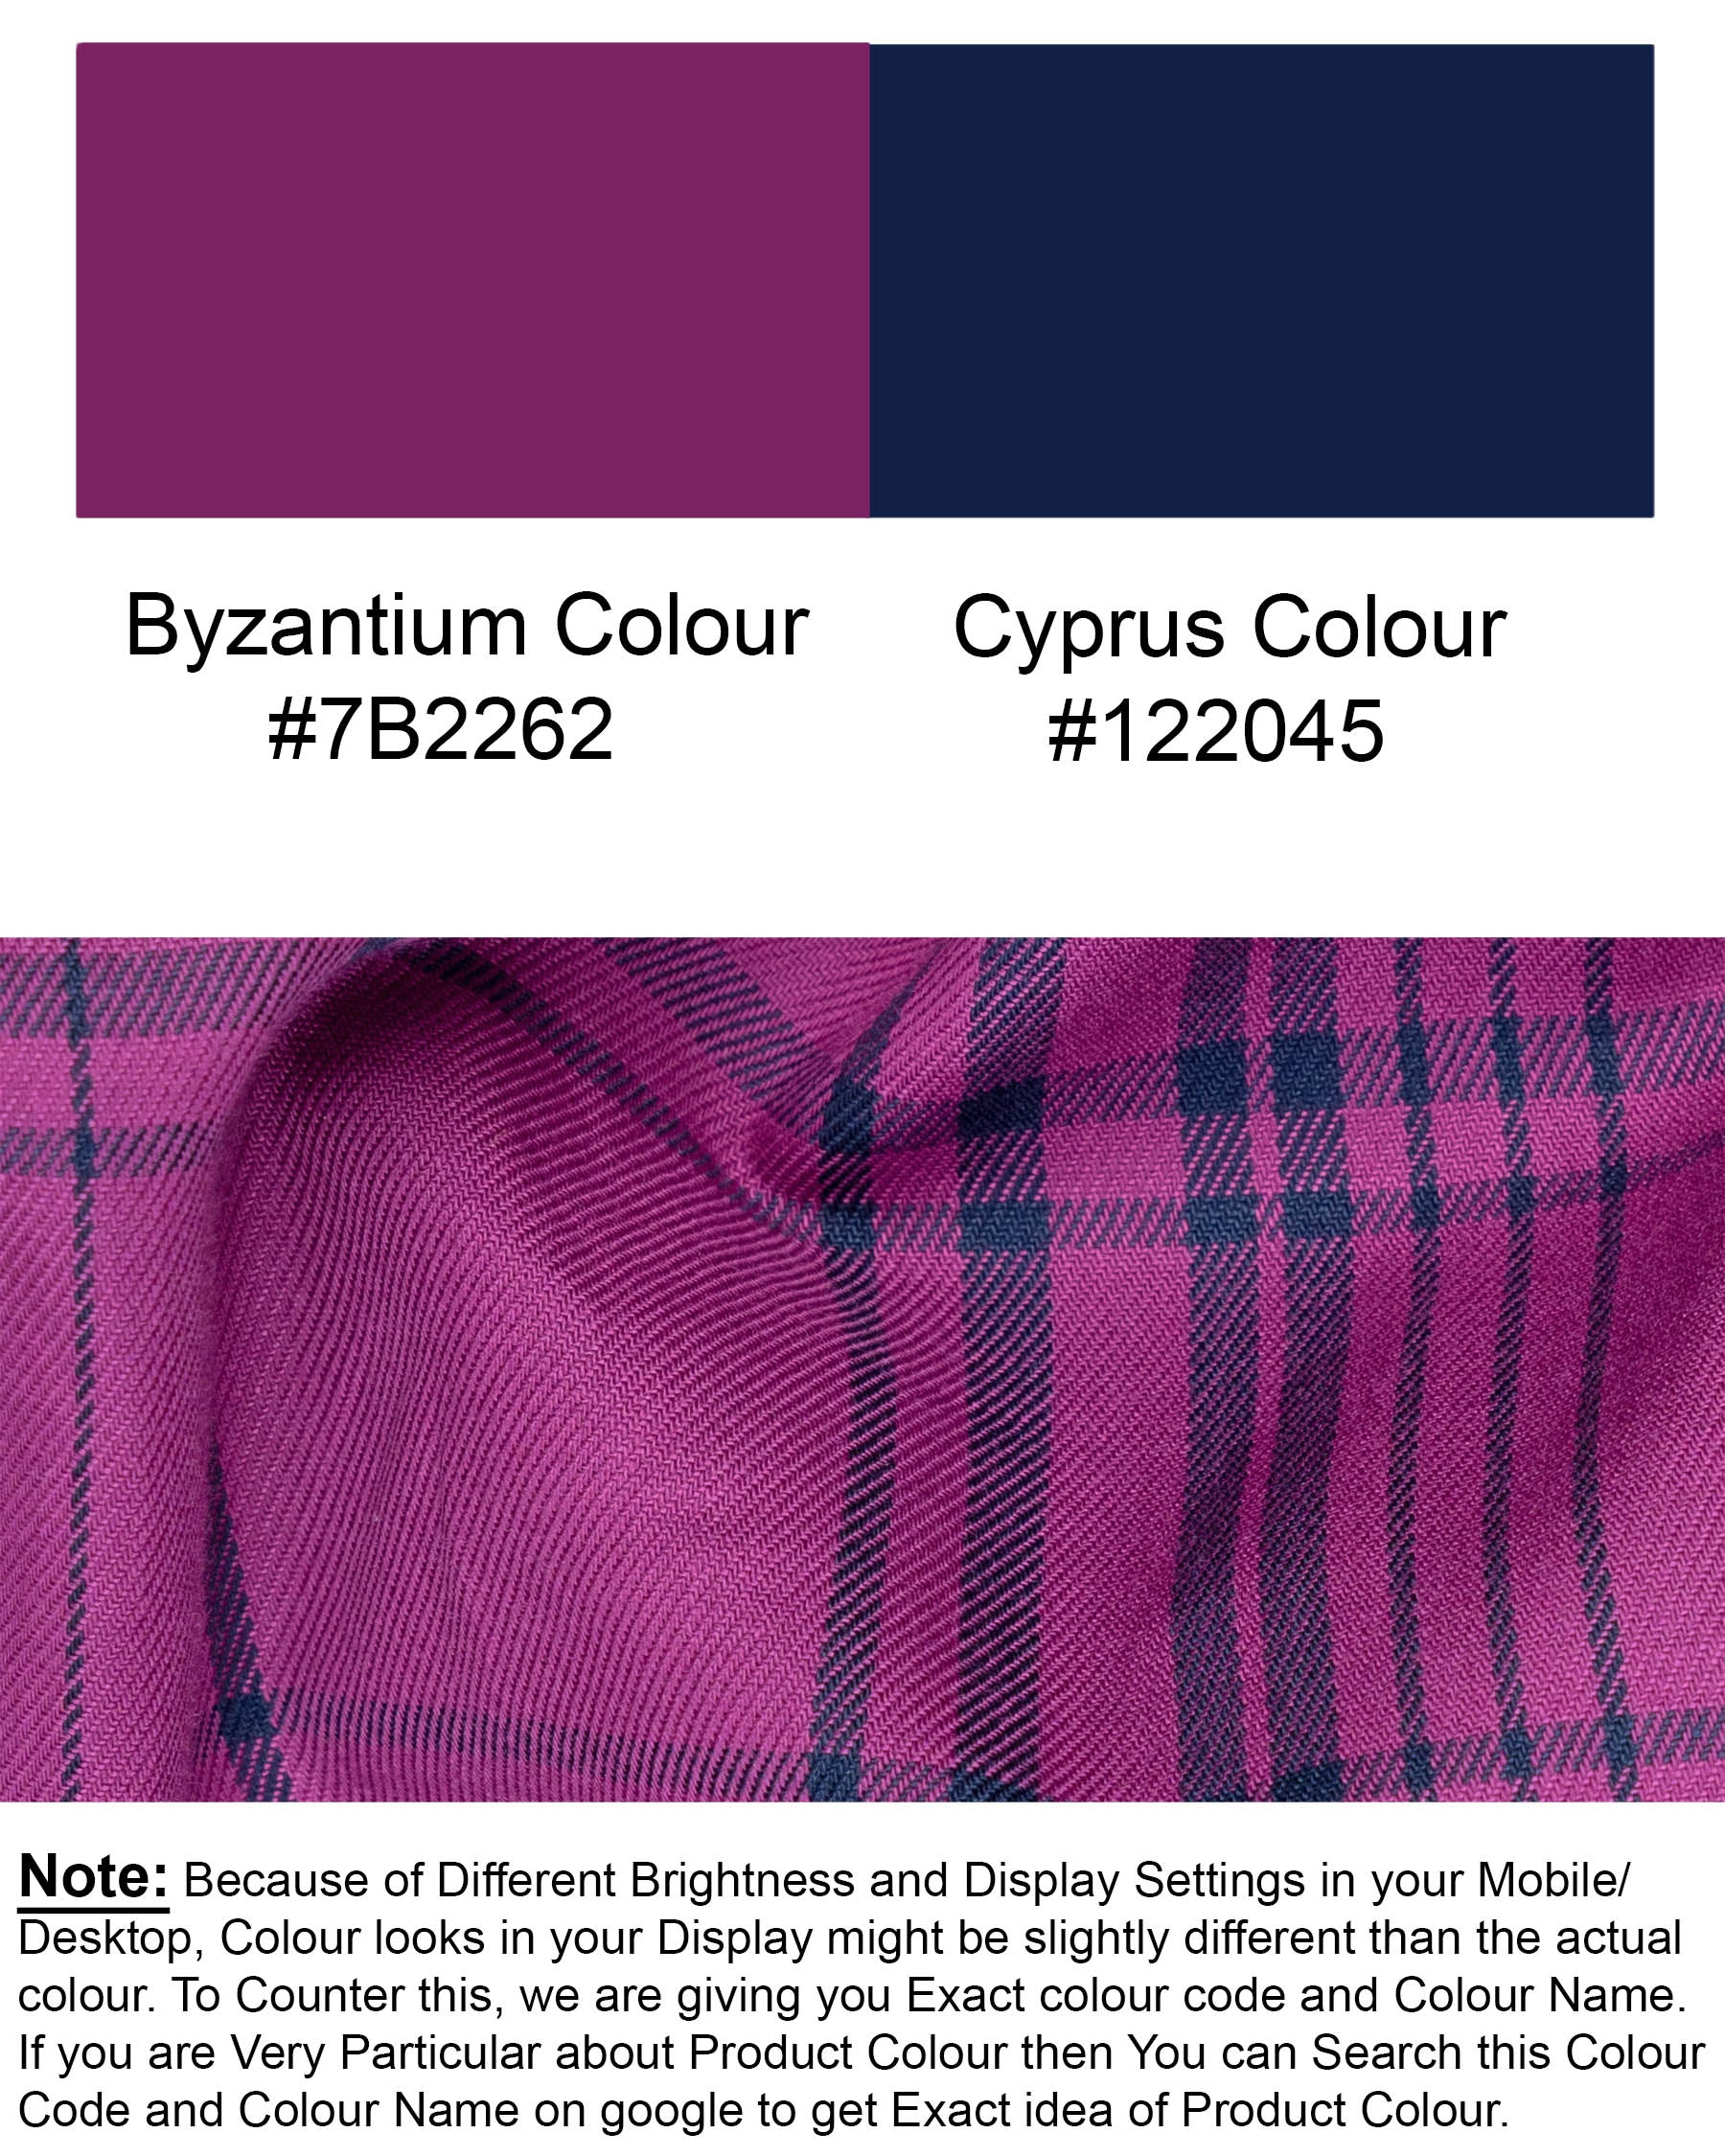 Byzantium Purple and Cyprus Blue Plaid Twill Textured Premium Cotton Shirt  6841-BD-BLE-38,6841-BD-BLE-38,6841-BD-BLE-39,6841-BD-BLE-39,6841-BD-BLE-40,6841-BD-BLE-40,6841-BD-BLE-42,6841-BD-BLE-42,6841-BD-BLE-44,6841-BD-BLE-44,6841-BD-BLE-46,6841-BD-BLE-46,6841-BD-BLE-48,6841-BD-BLE-48,6841-BD-BLE-50,6841-BD-BLE-50,6841-BD-BLE-52,6841-BD-BLE-52